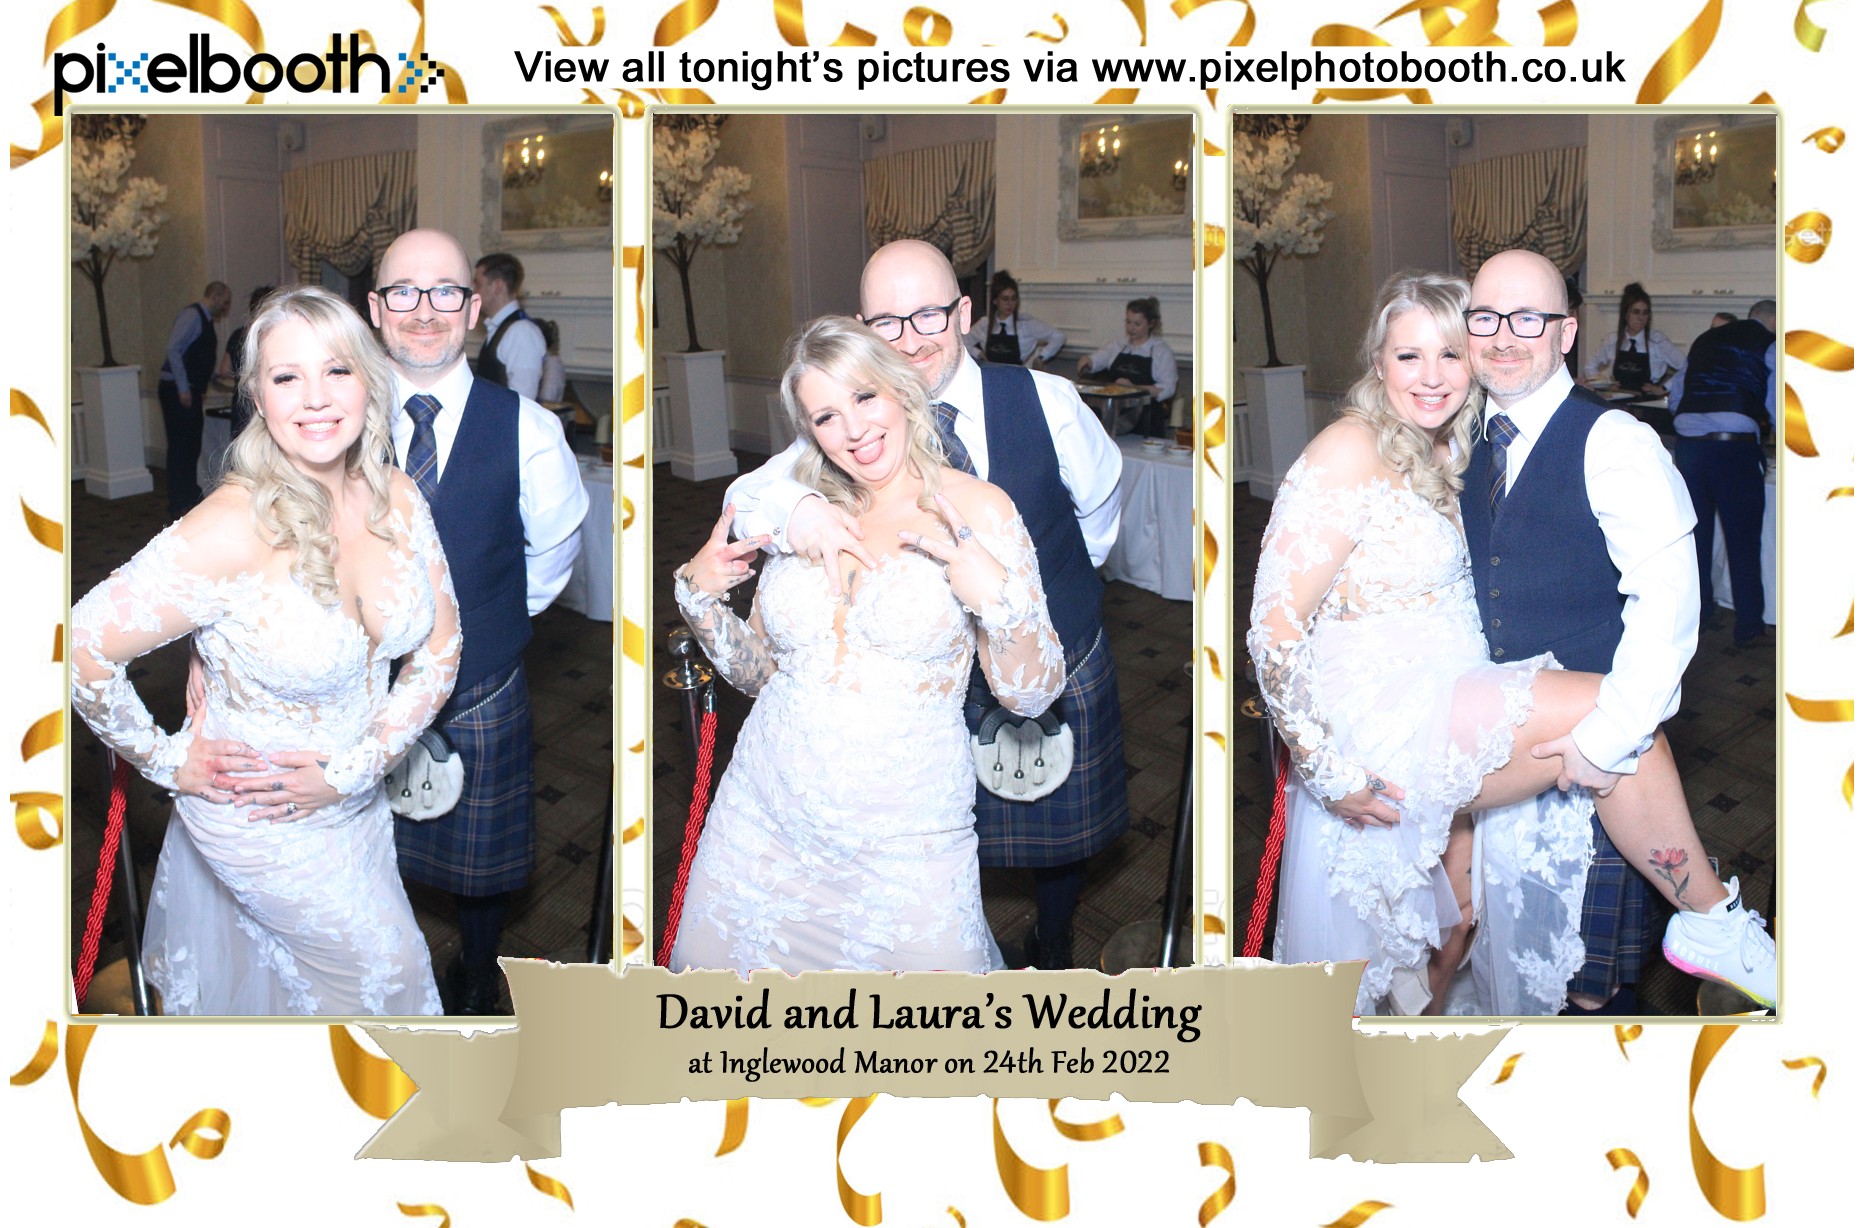 24th Feb 2022: David and Laura's Wedding at Inglewood Manor